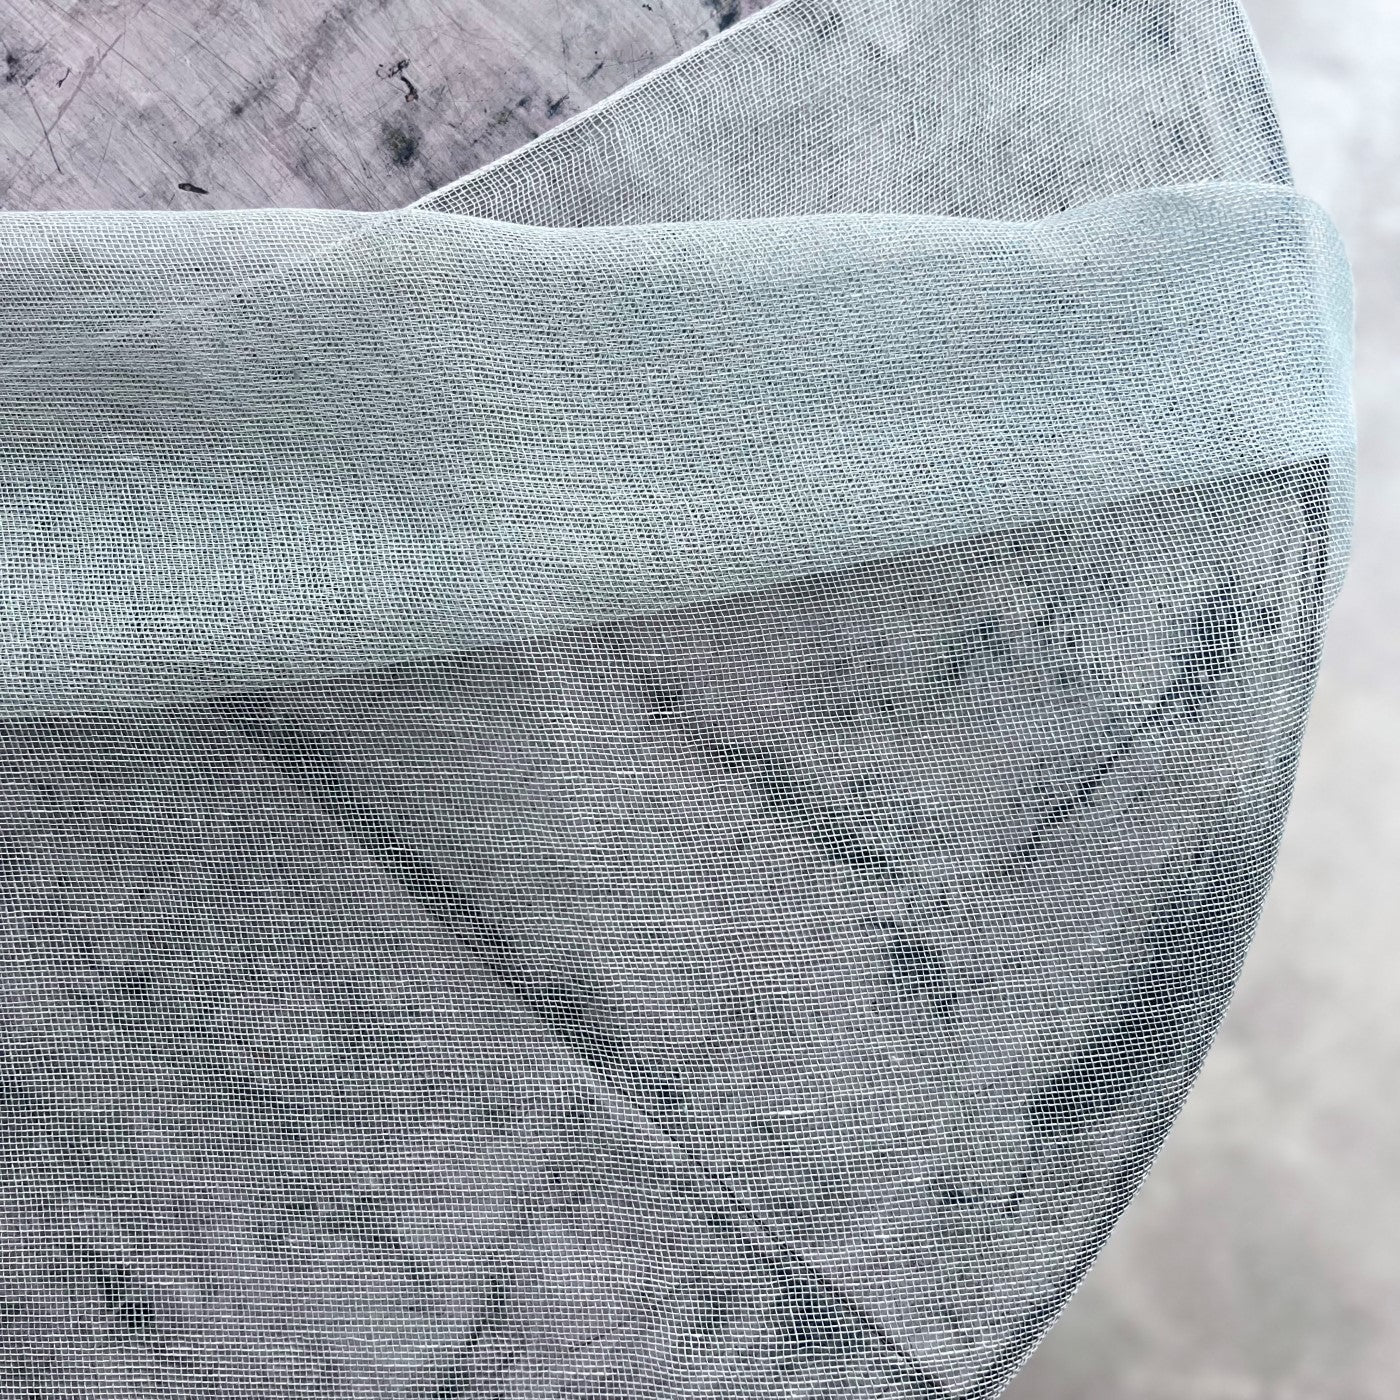 Translucent handwoven linen tablecloth in light blue color 140x200 cm